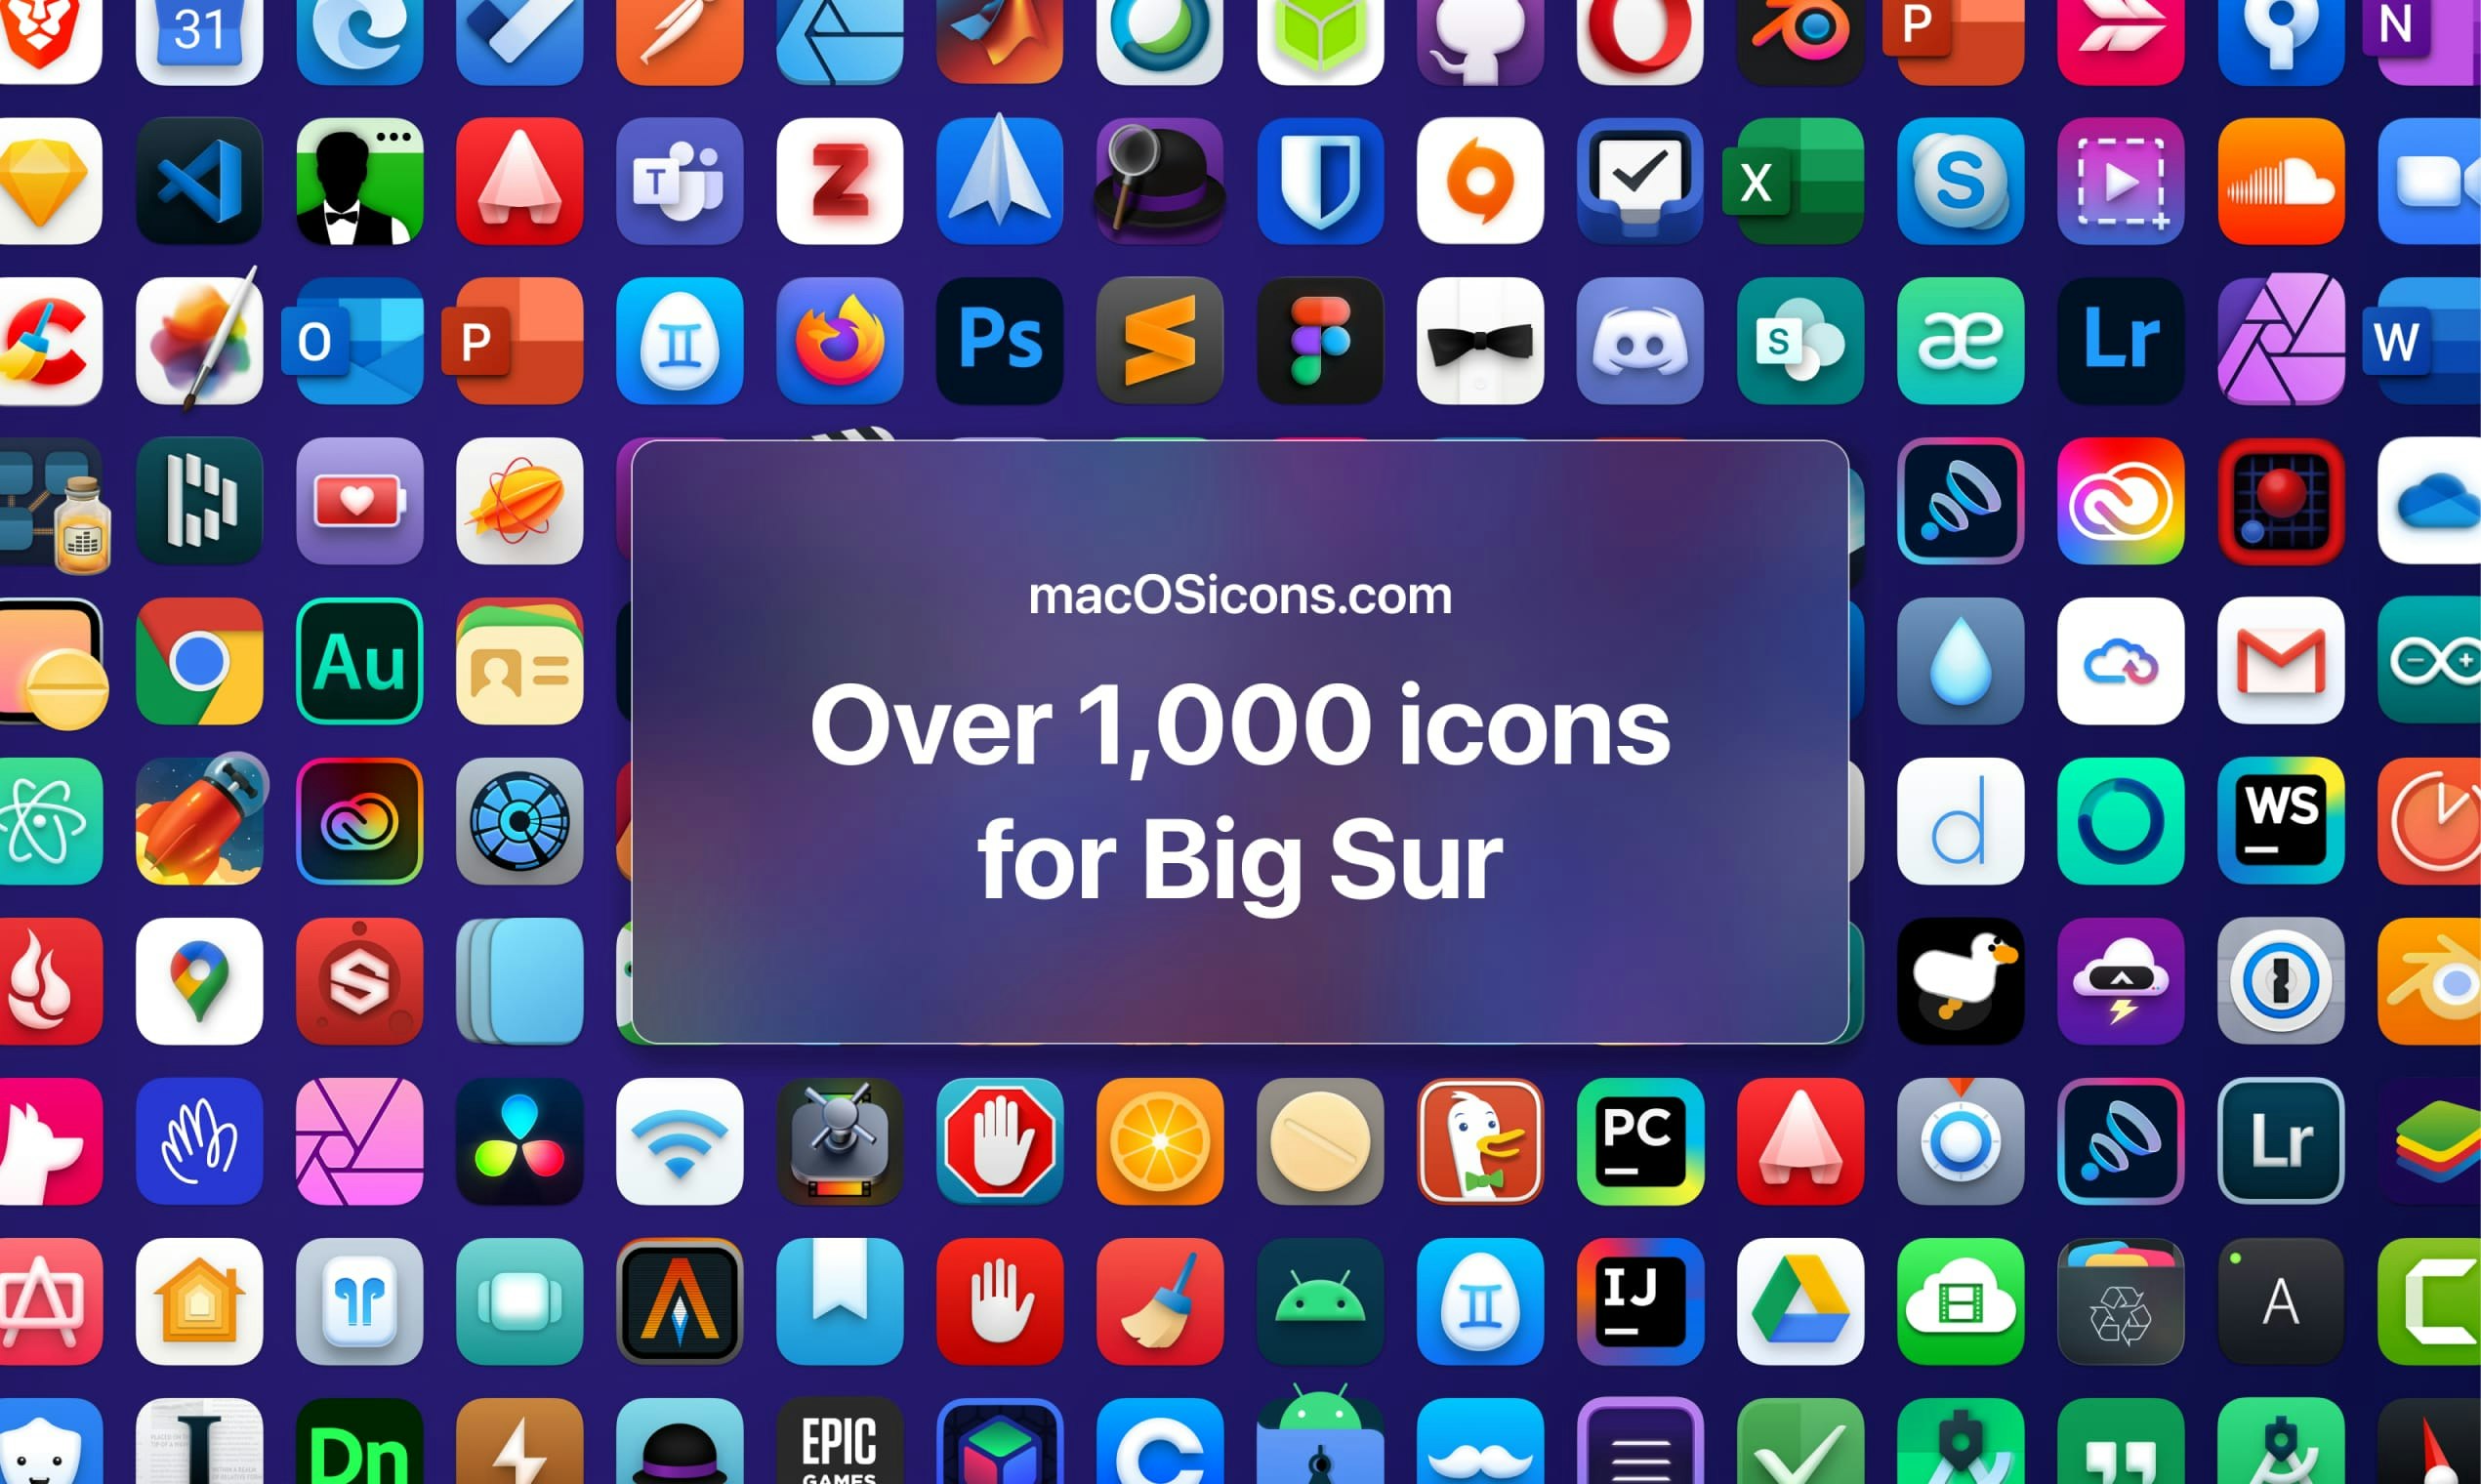 macos big sur icons pack